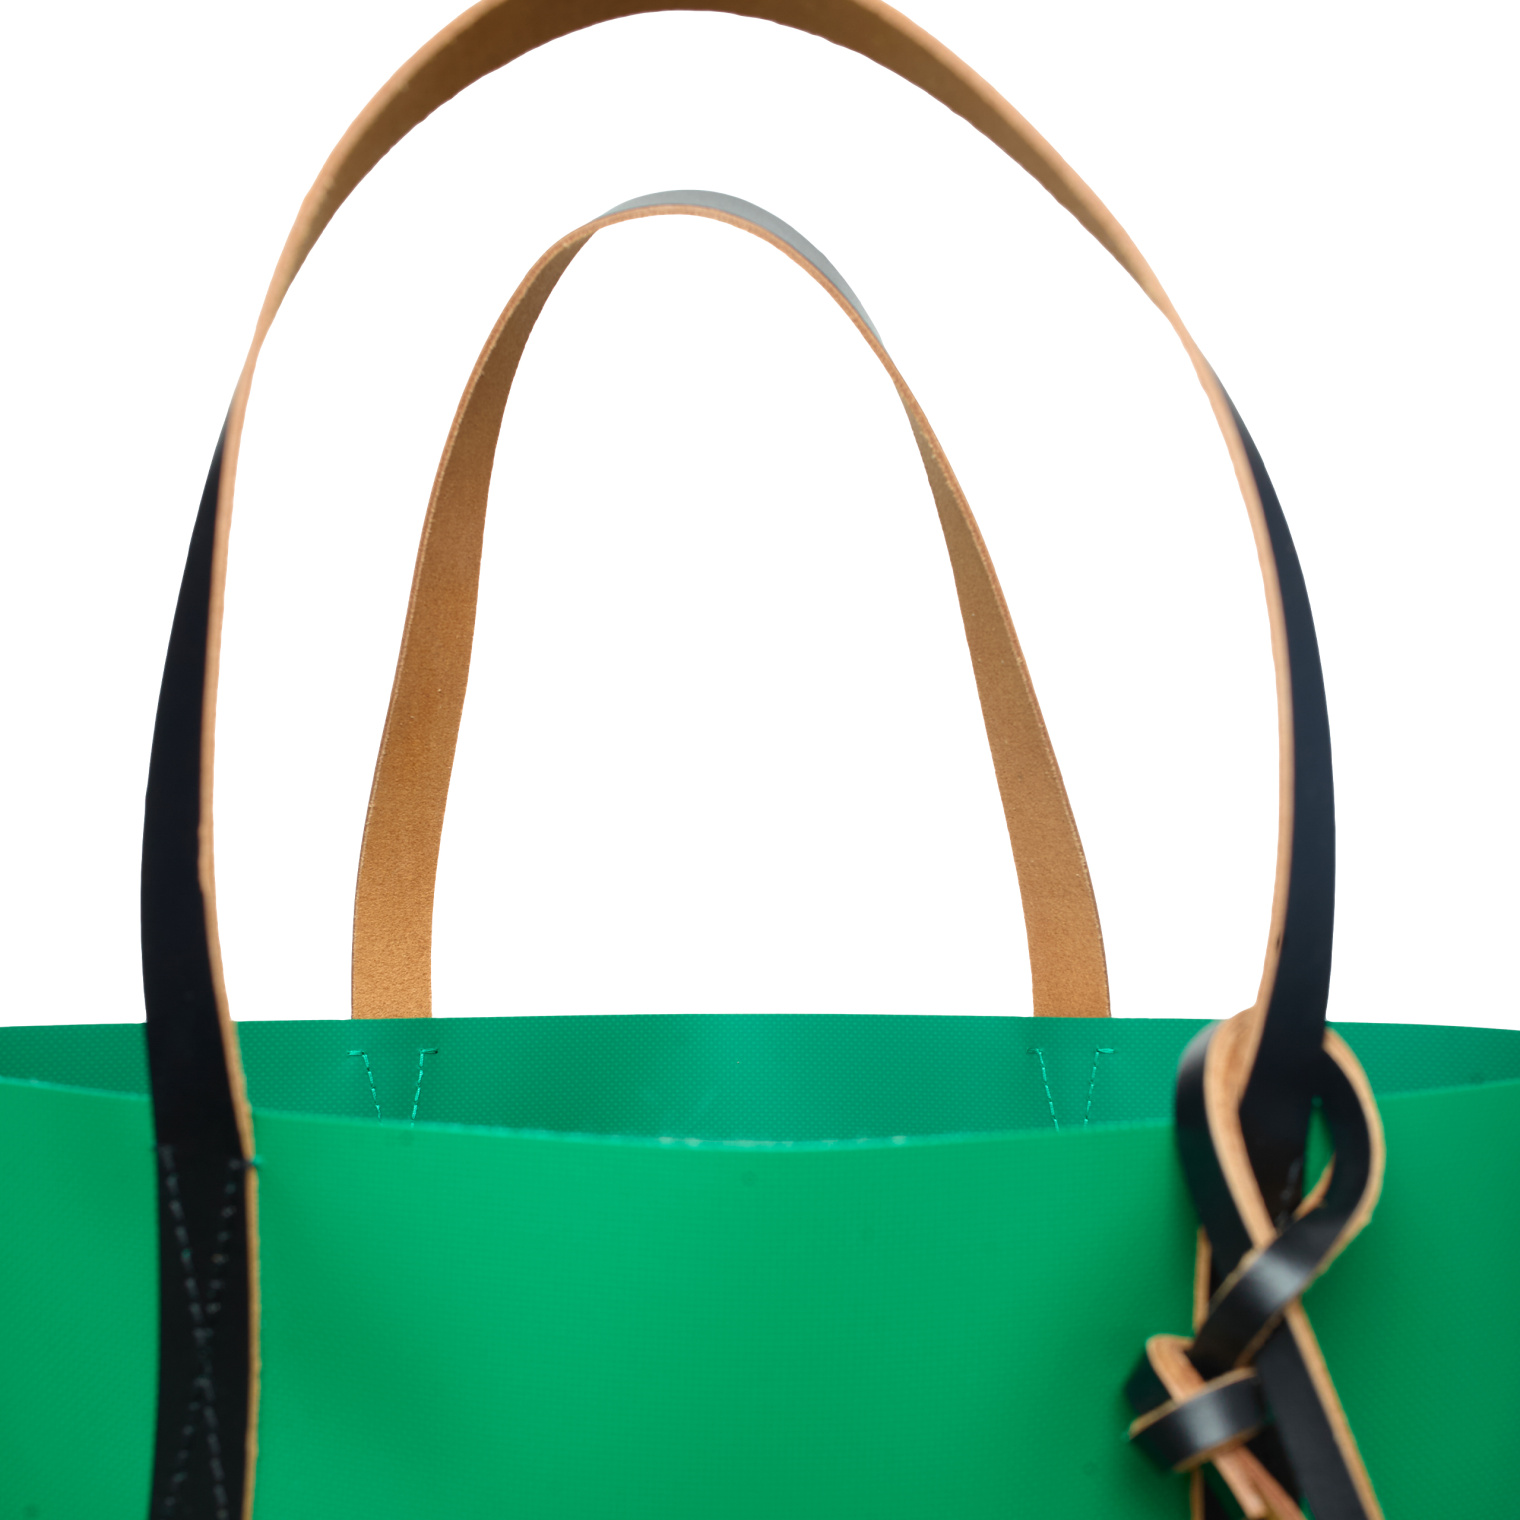 Marni Tribeca shopper bag